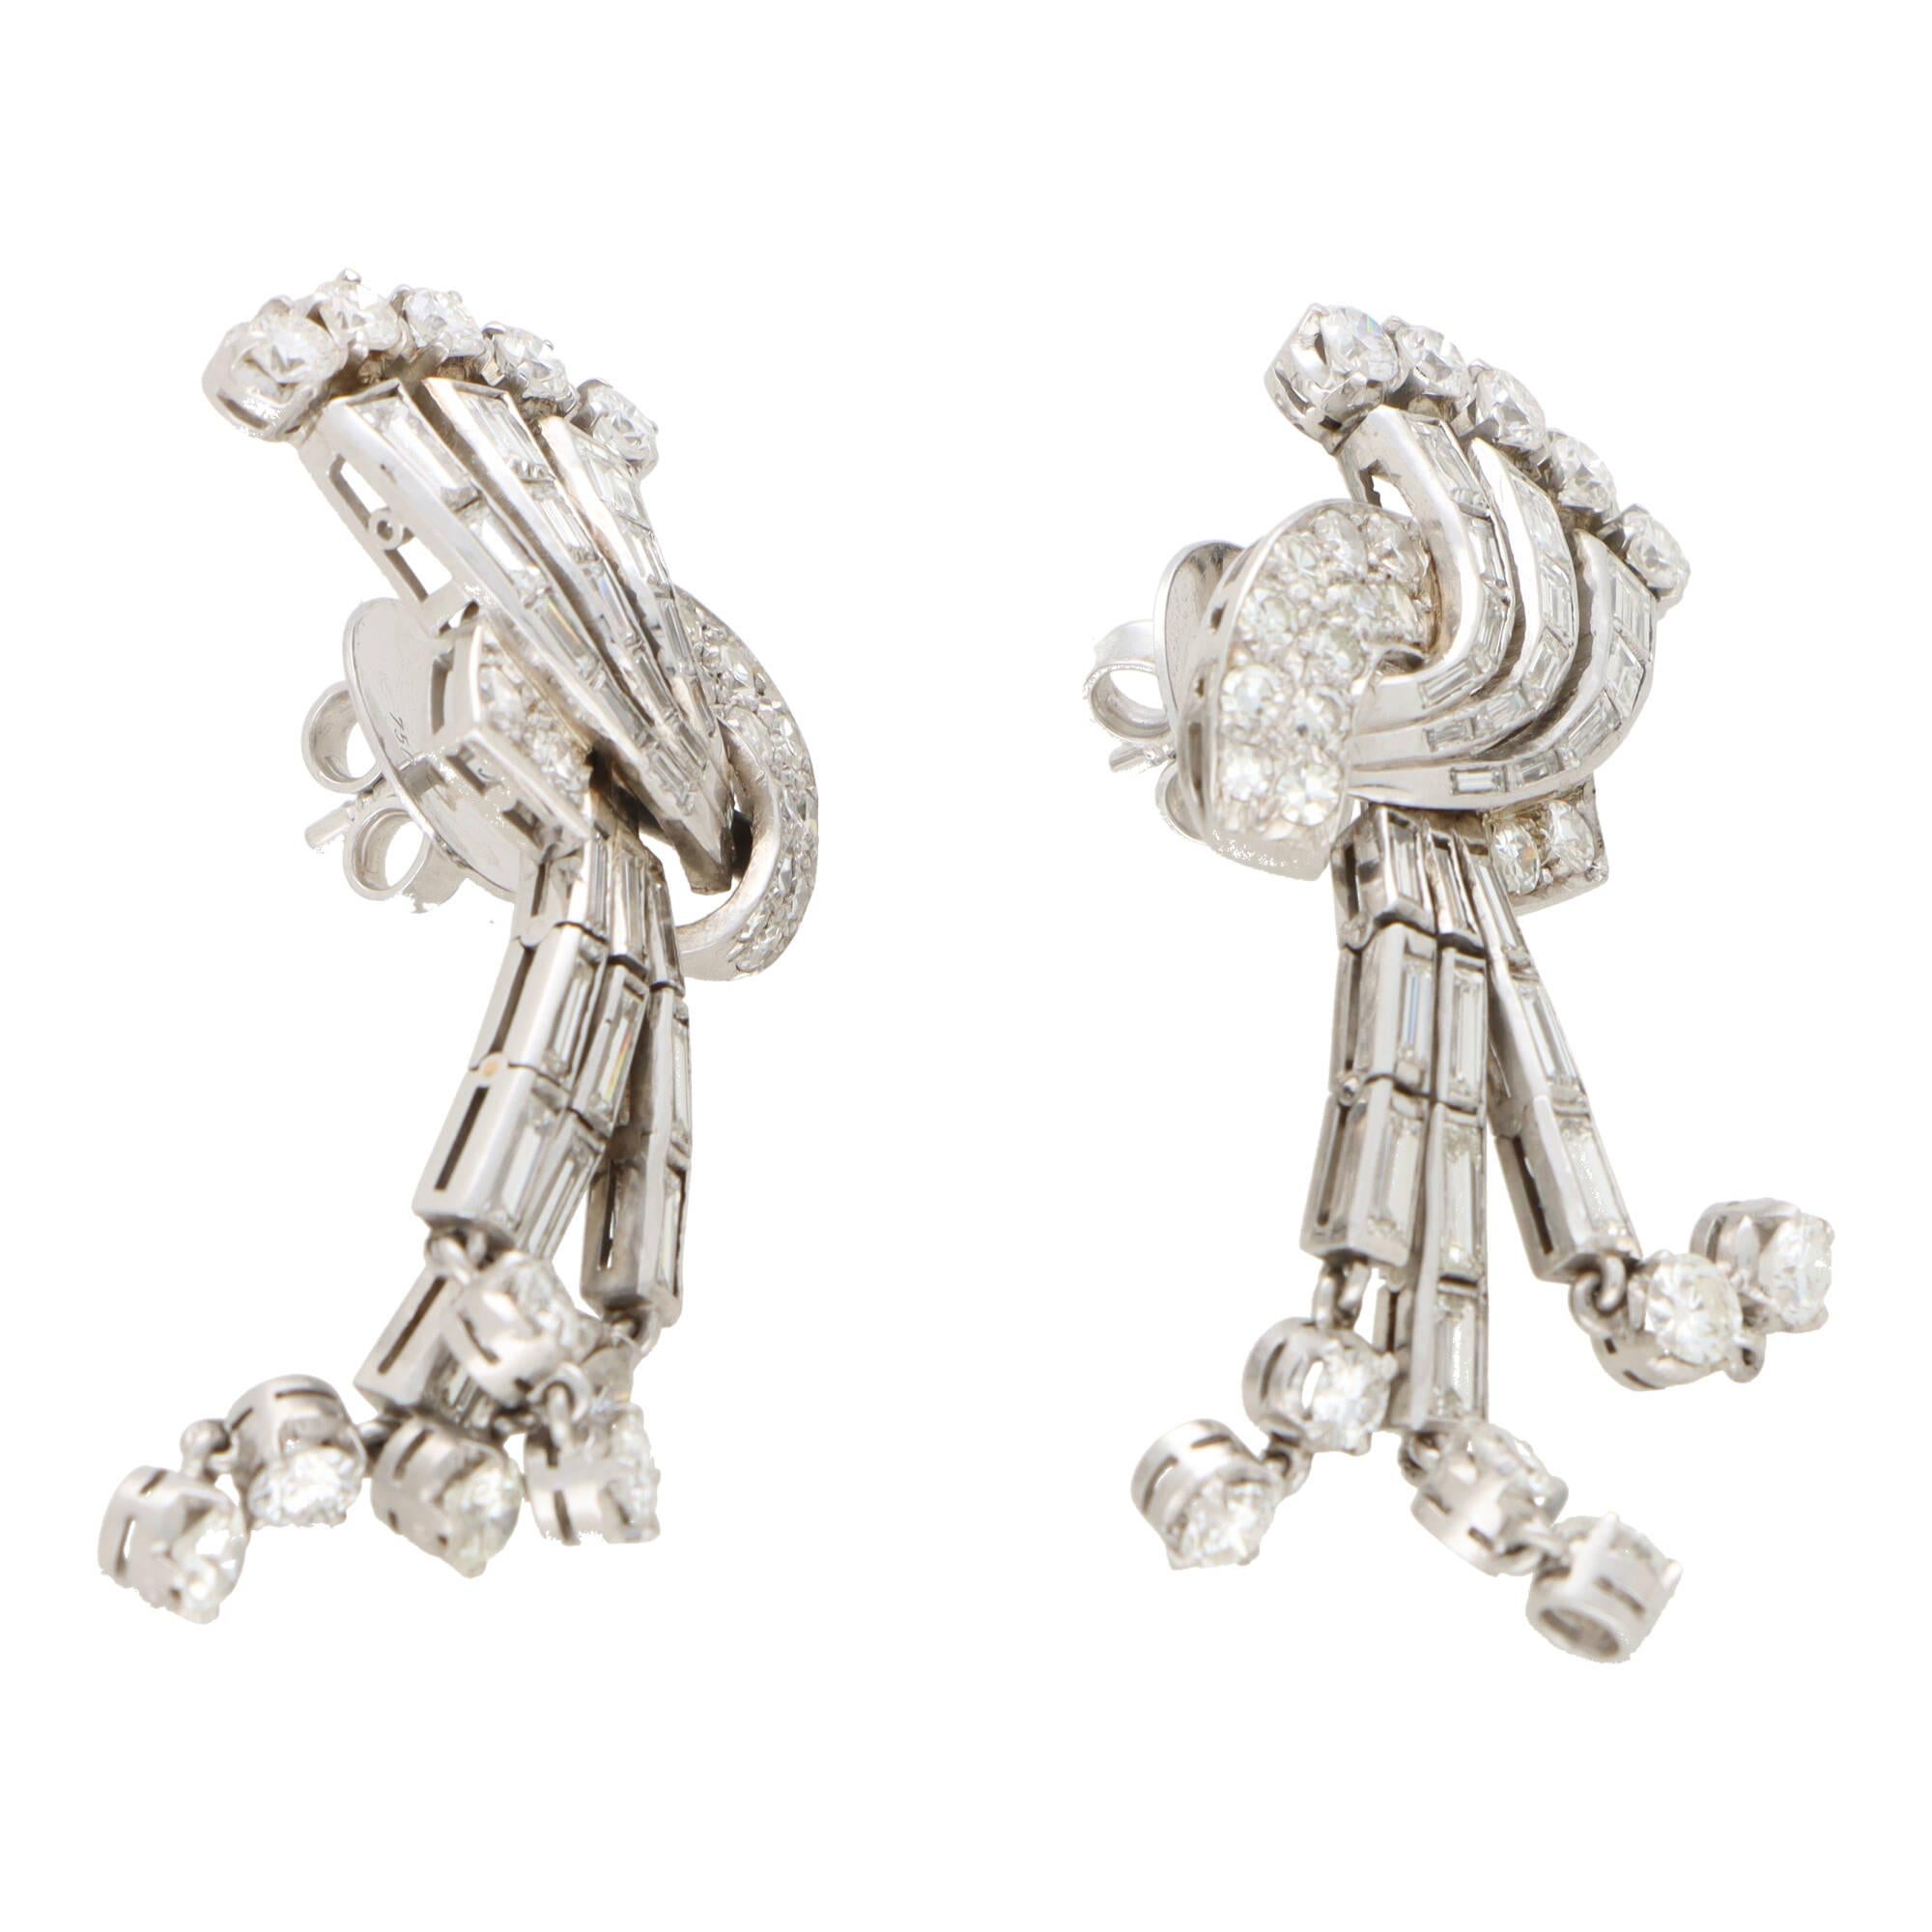 Art Deco Vintage 1940's Deco Inspired Diamond Drop Earrings